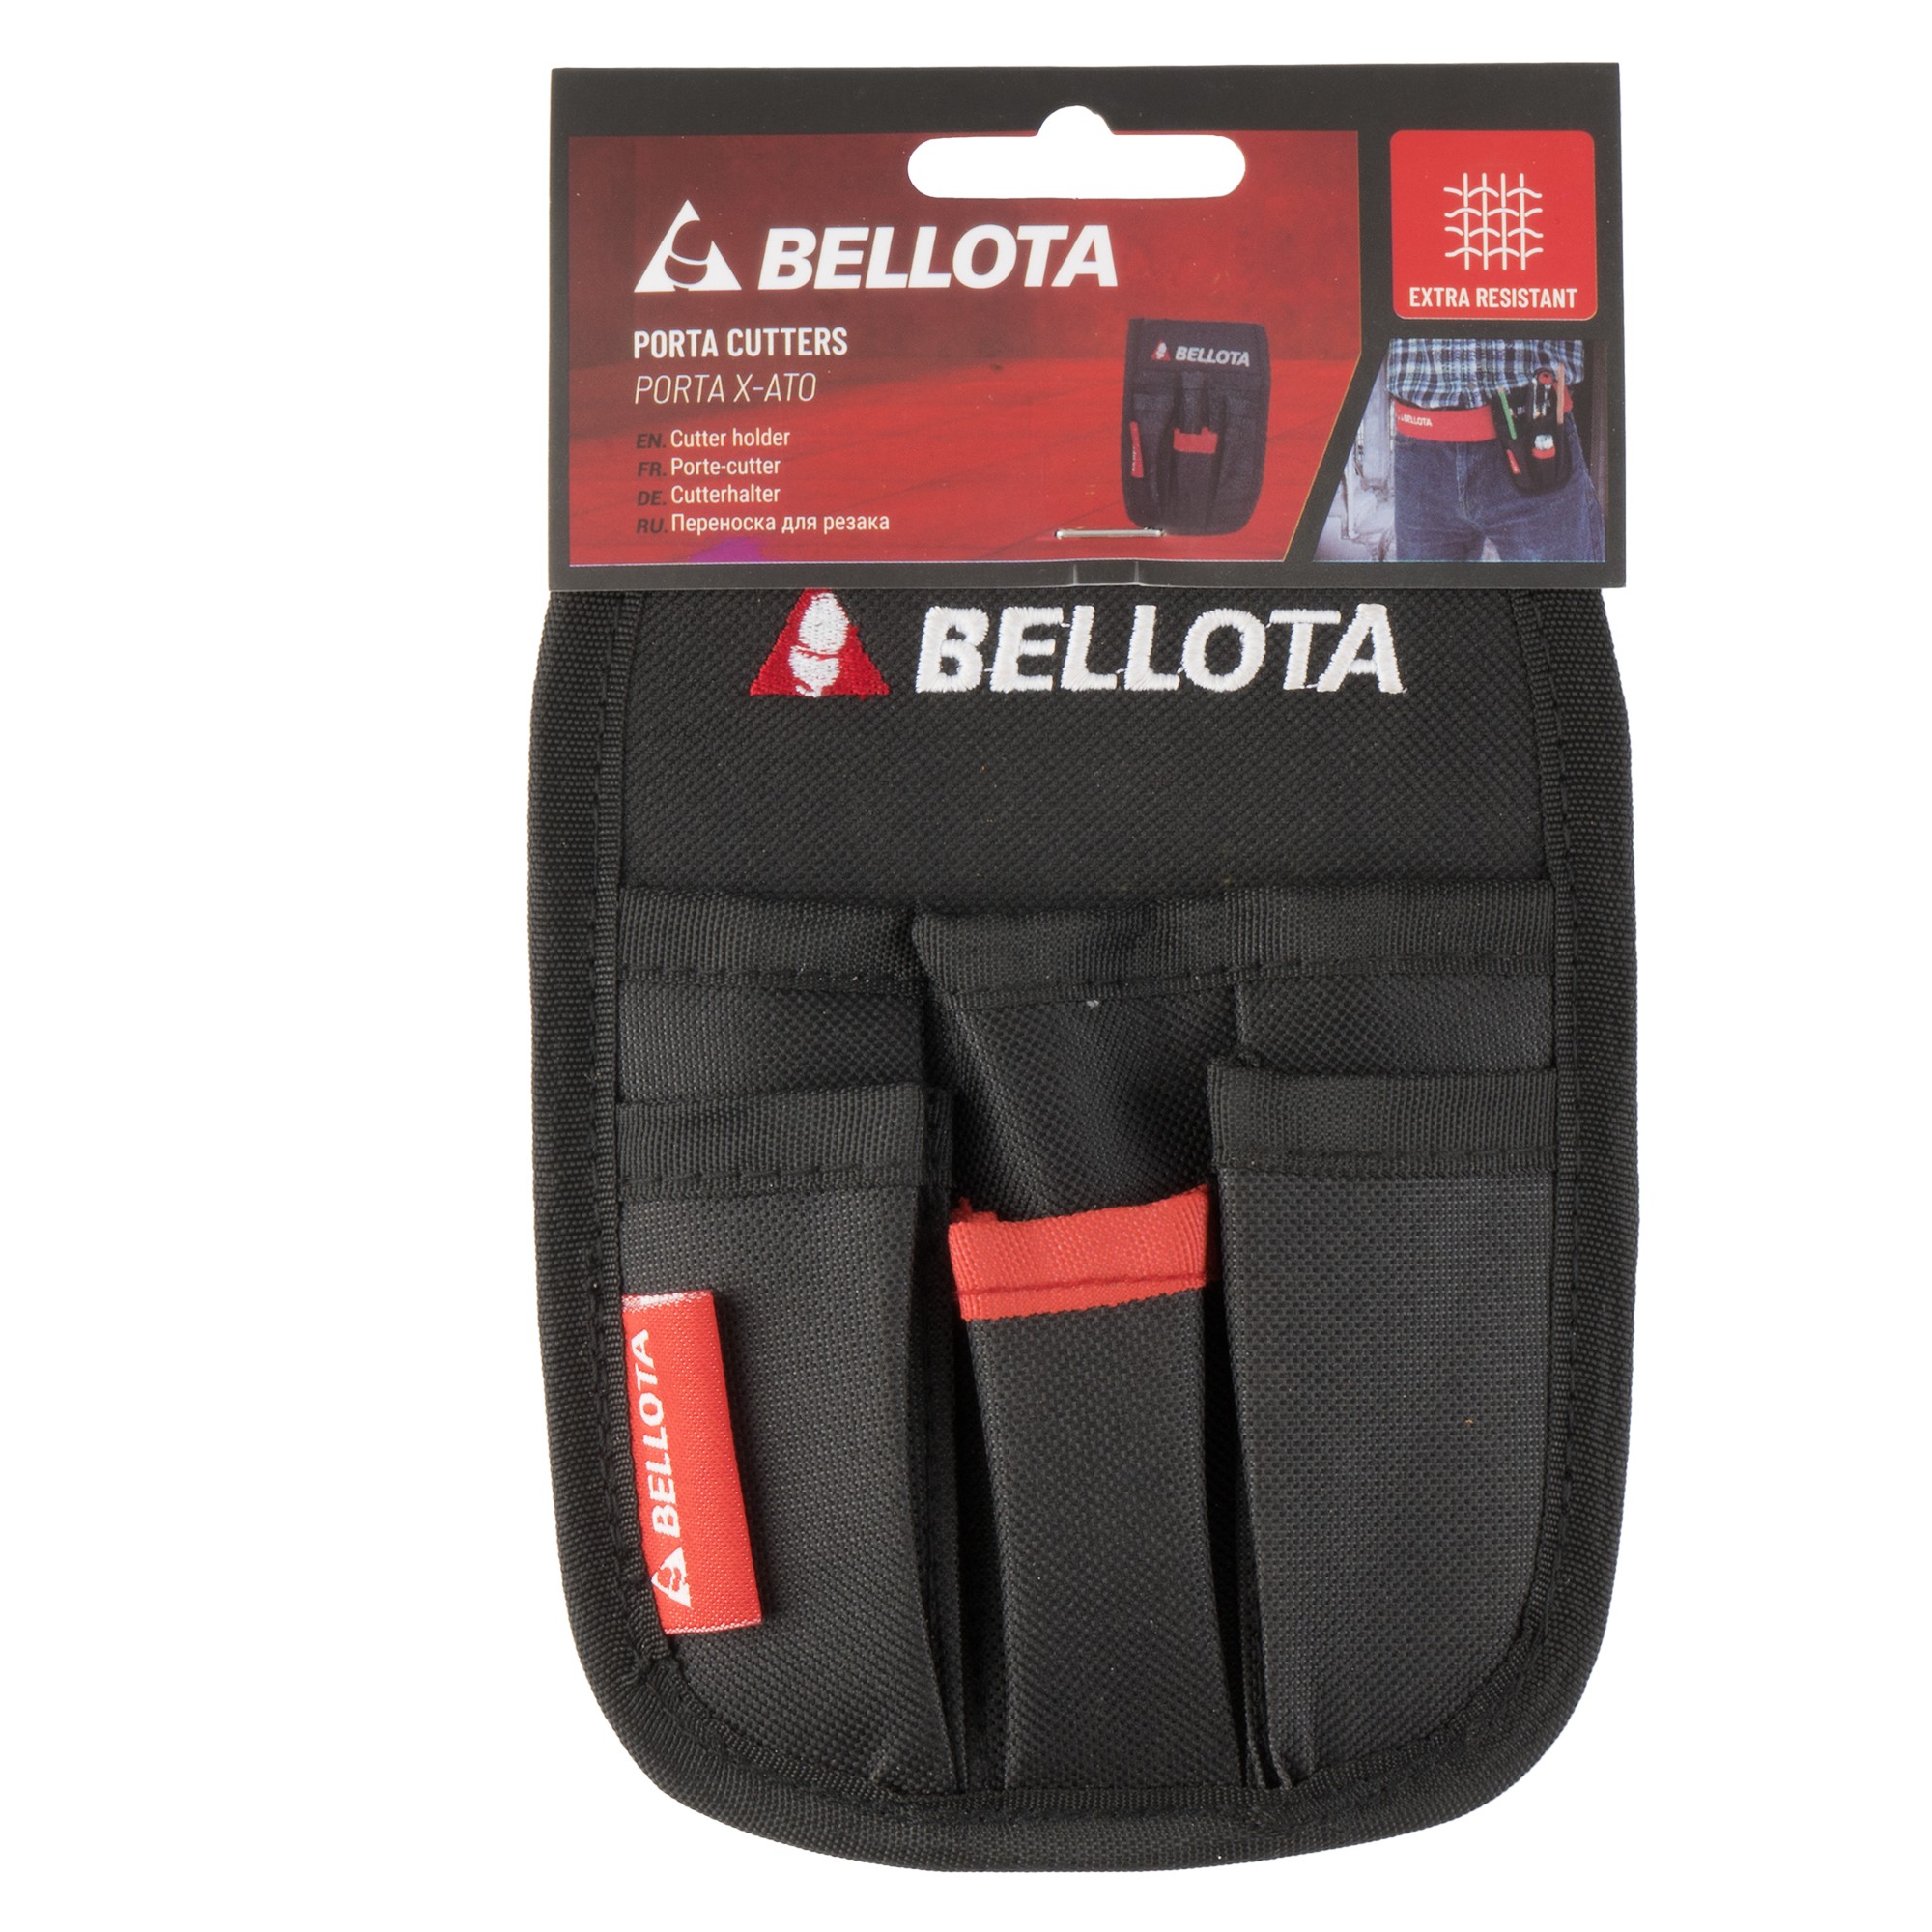 Bellota - Porta /